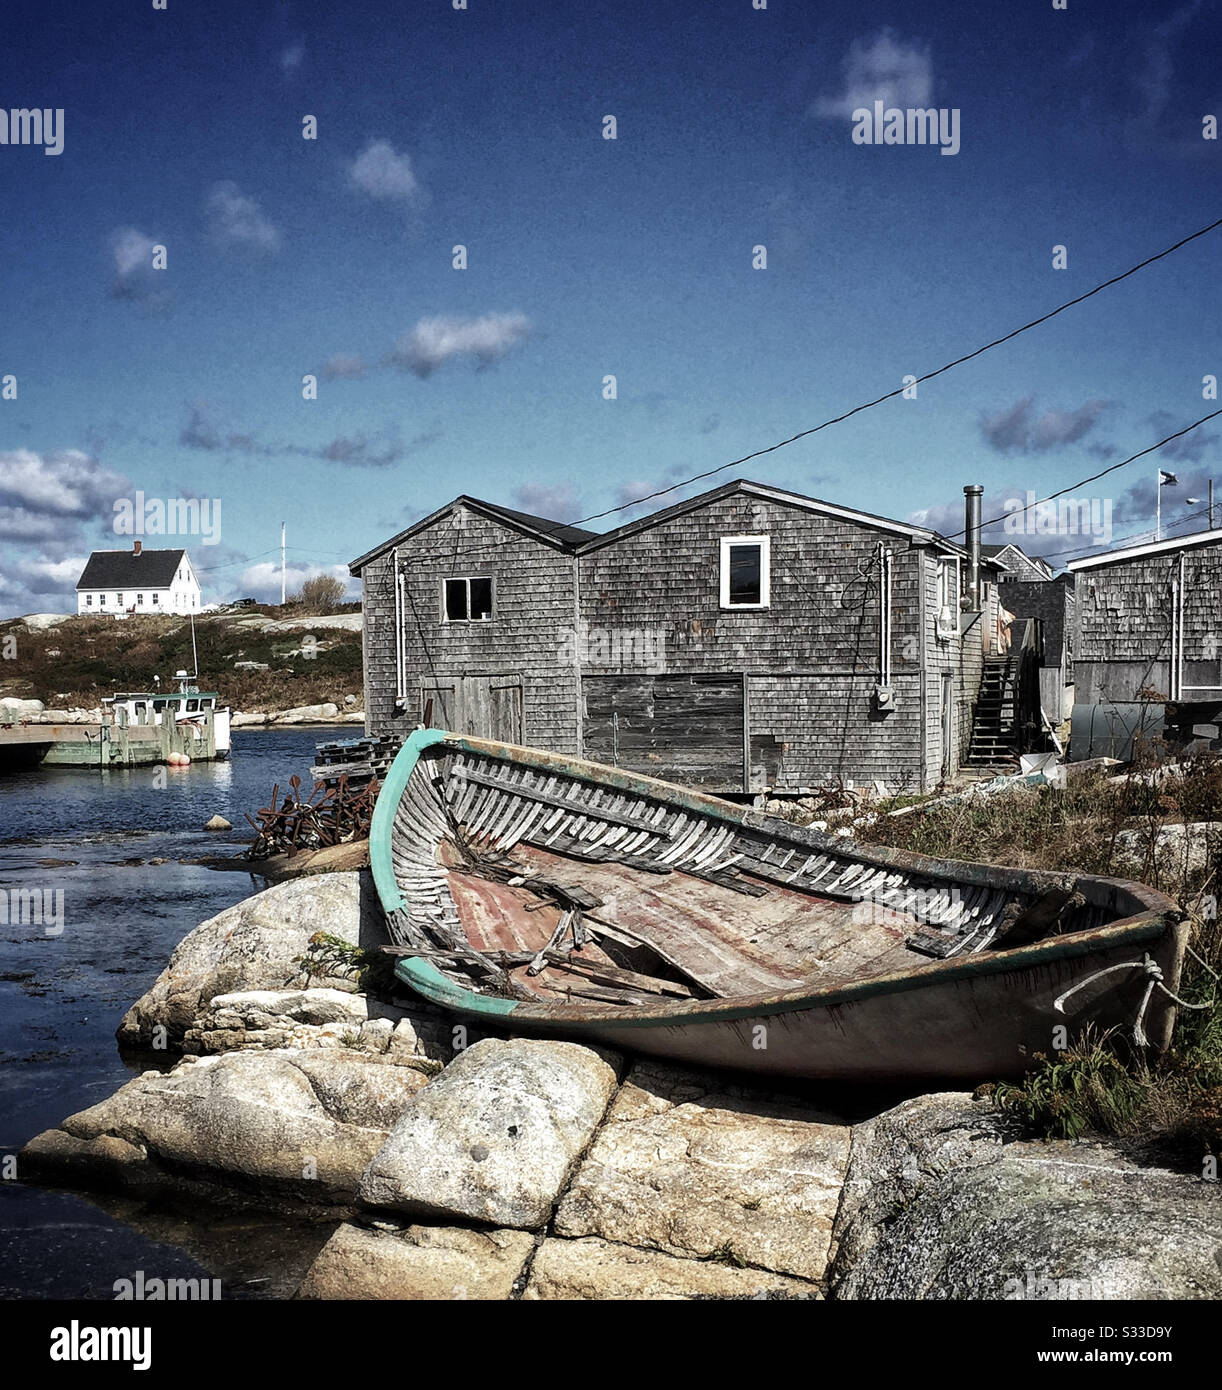 Broken shell of a wooden boat on rocks in a Nova Scotia fishing village Stock Photo